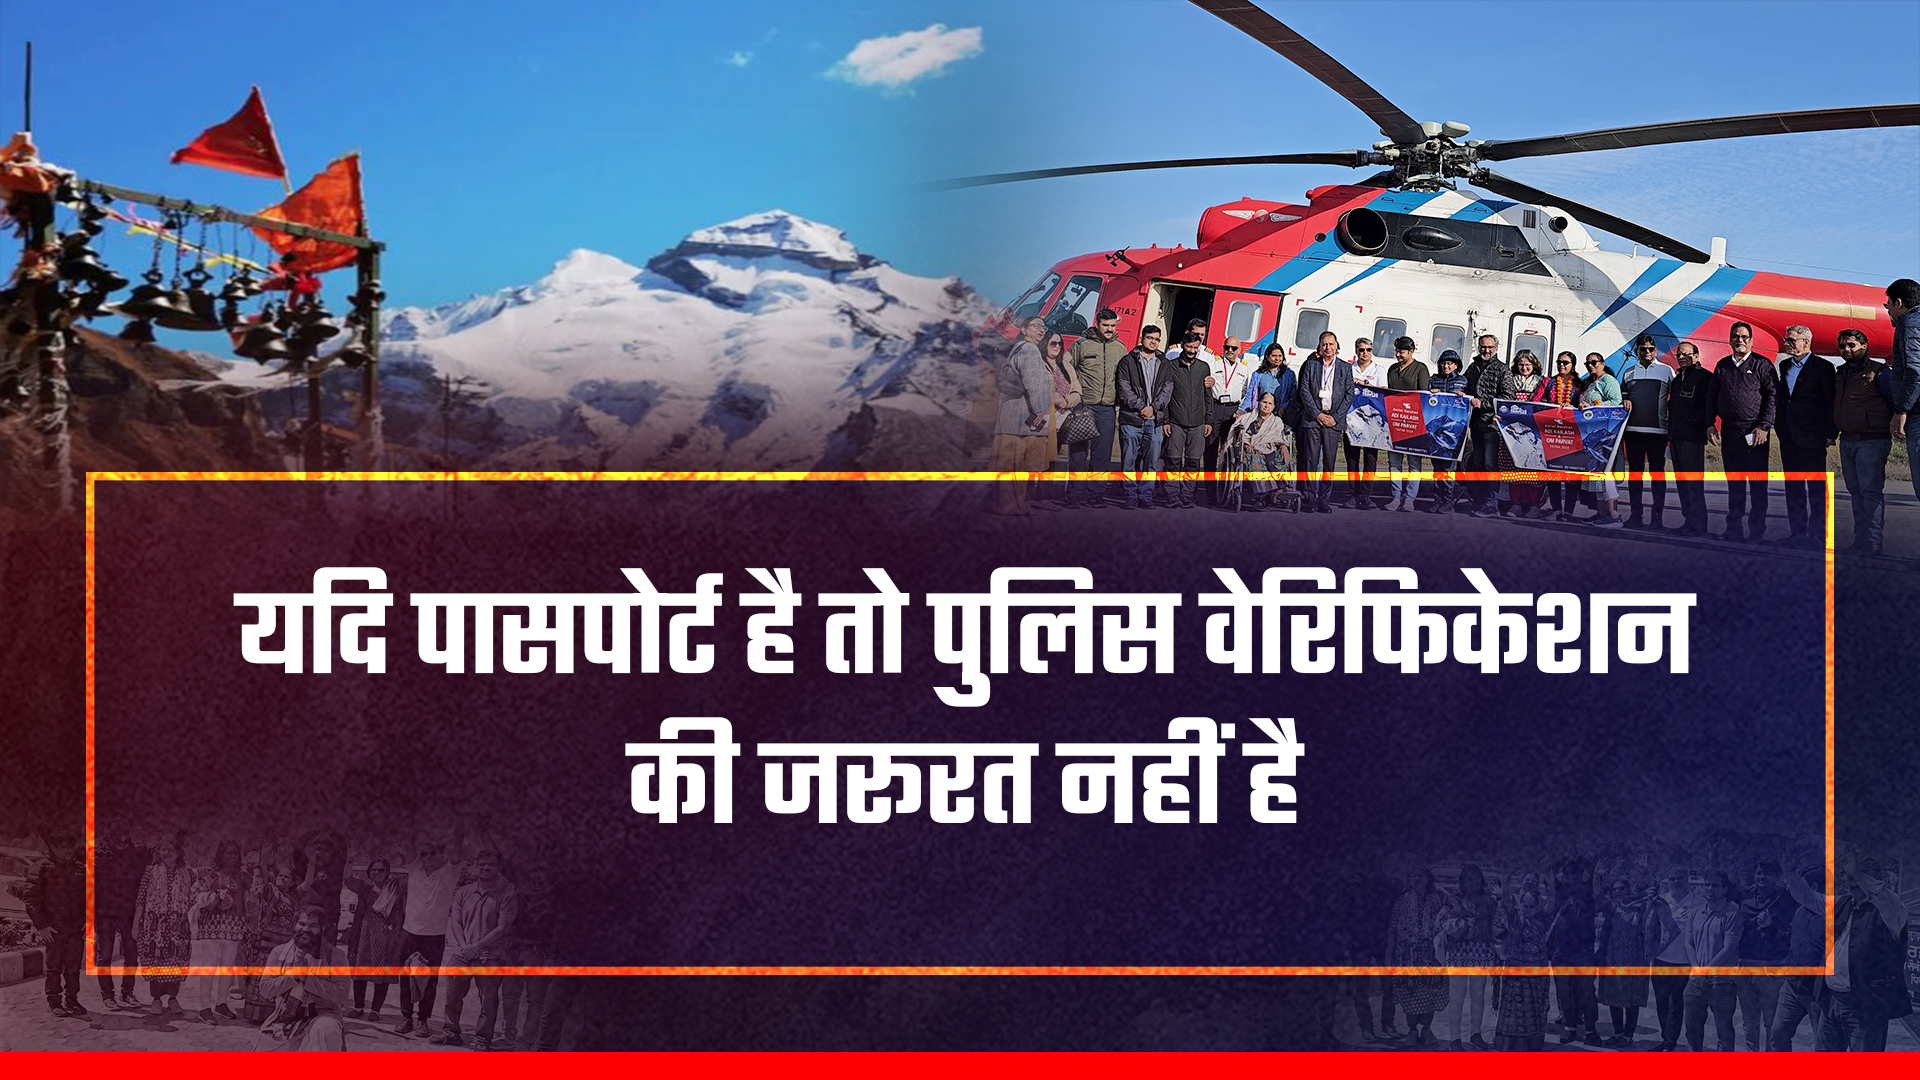 Adi Kailash and Om Parvat winter tourism